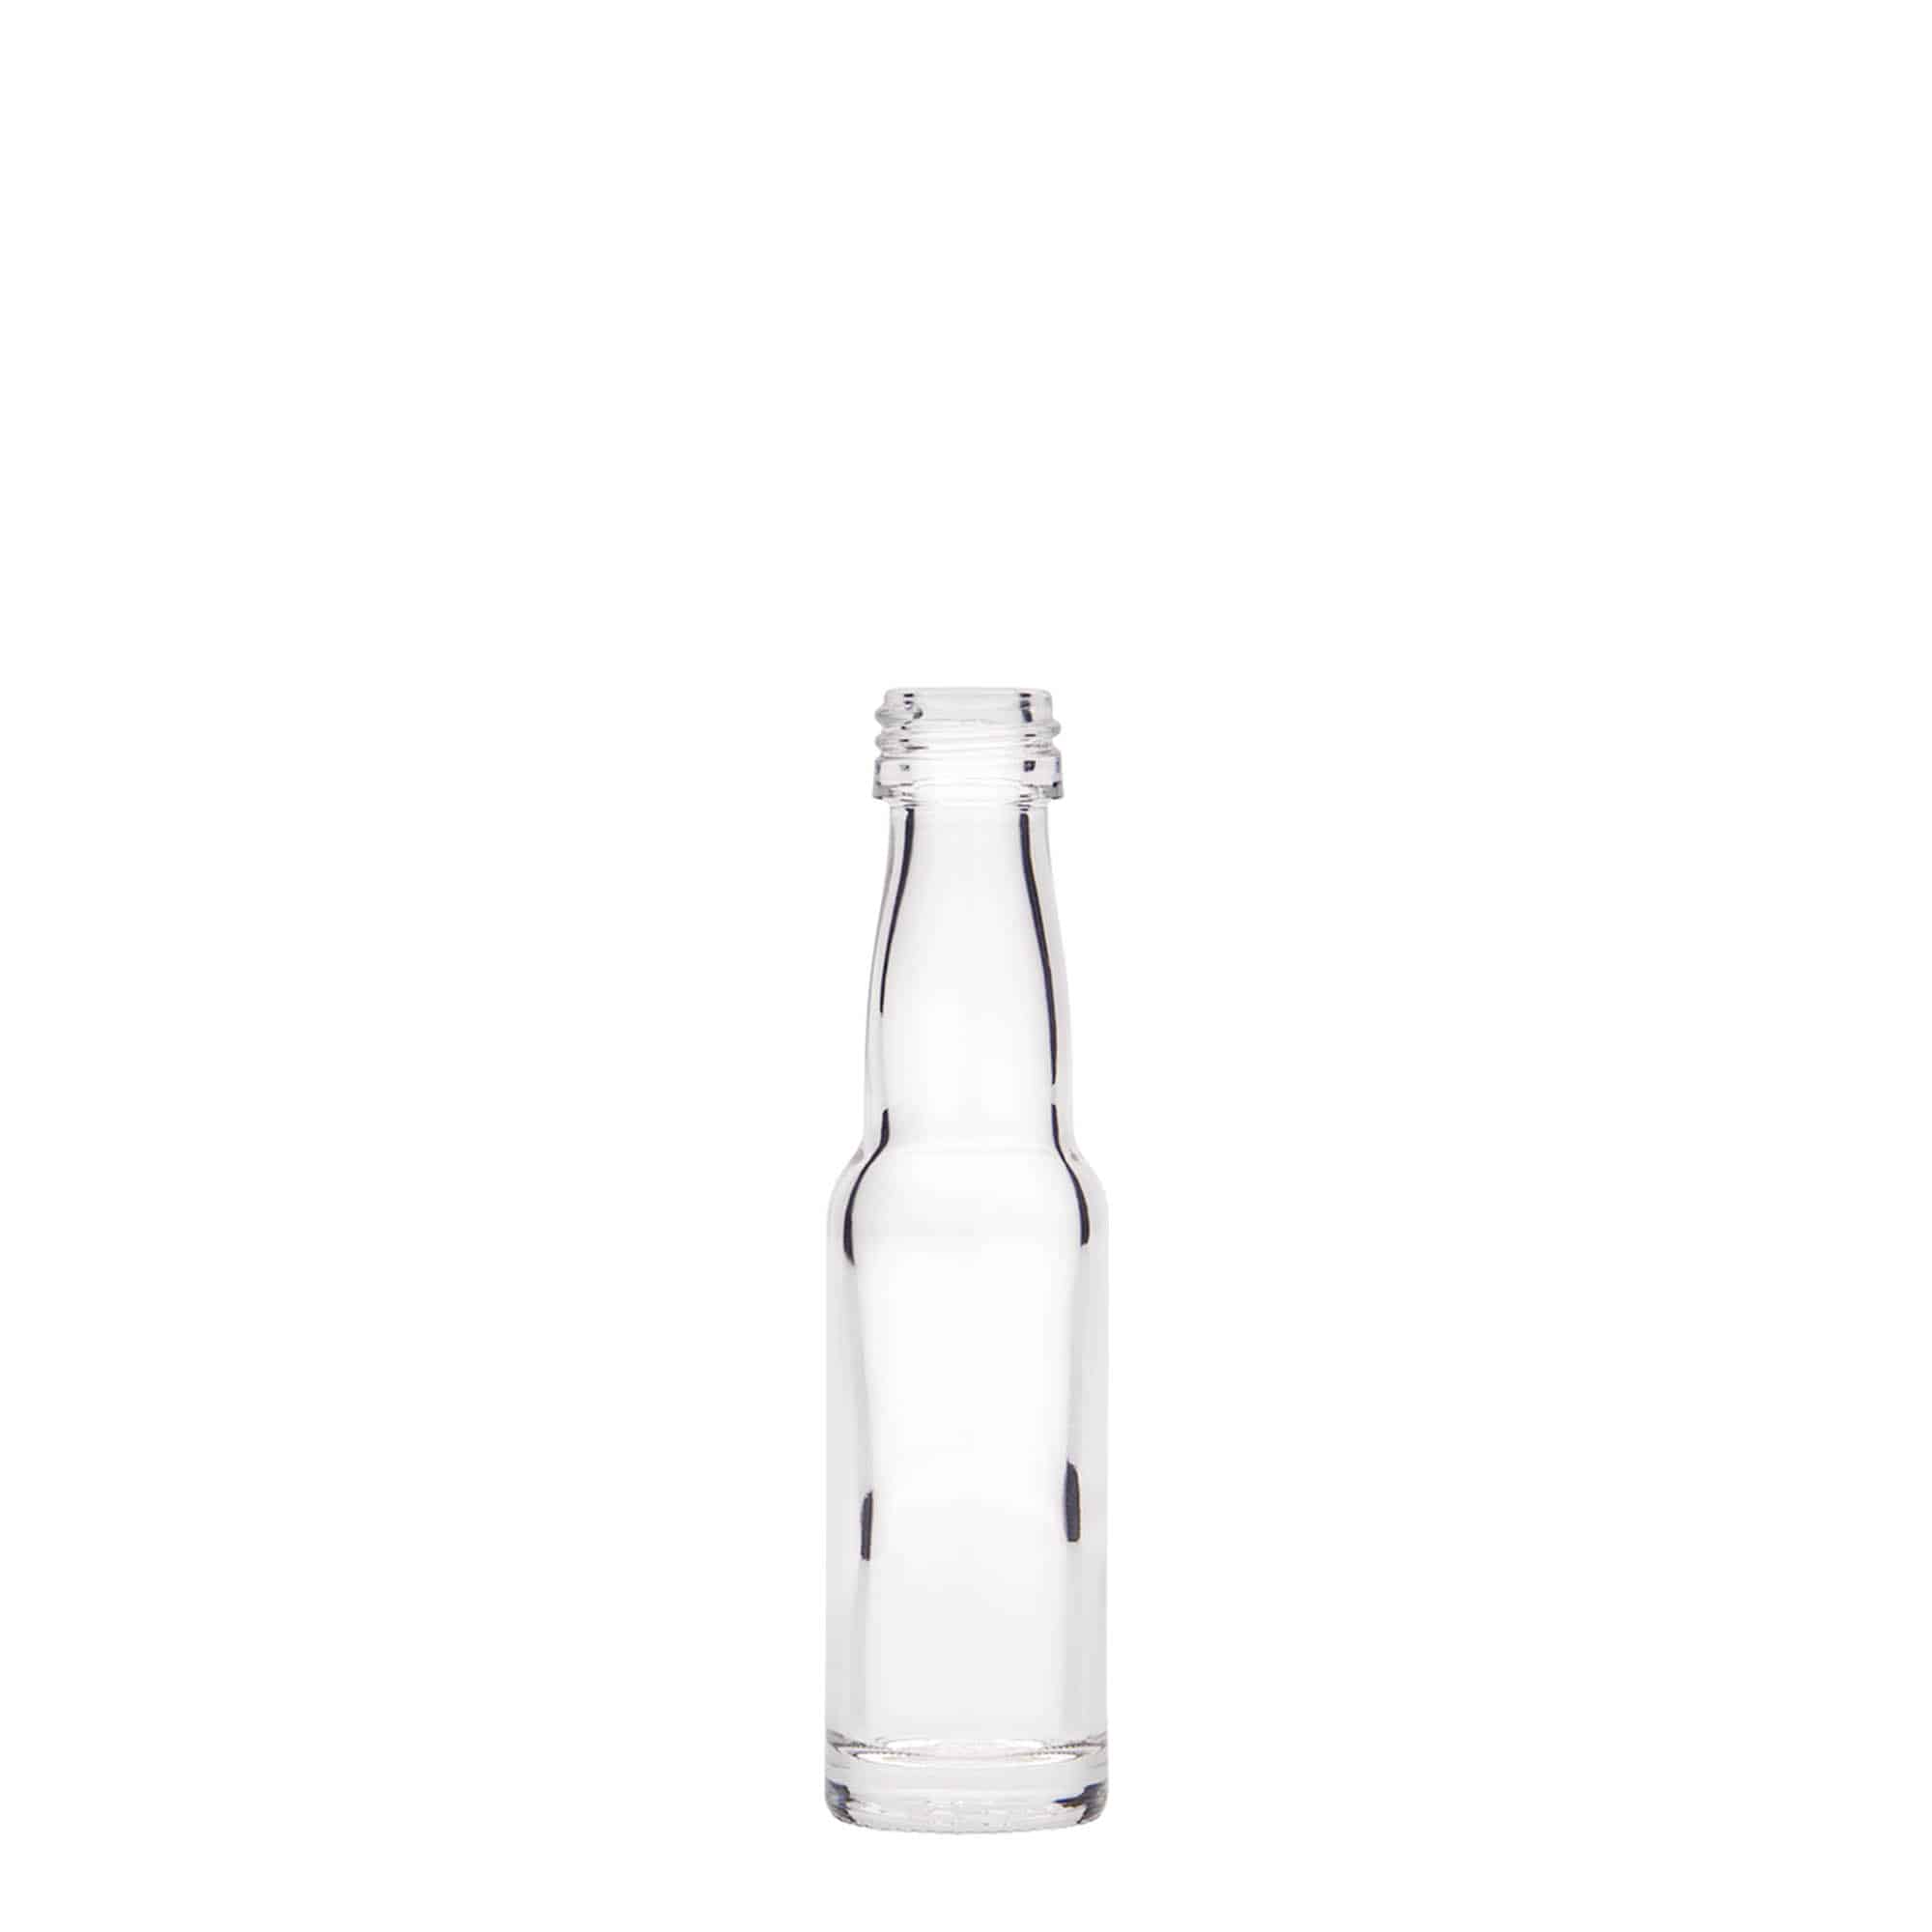 20 ml glass bottle 'Proba', closure: PP 18